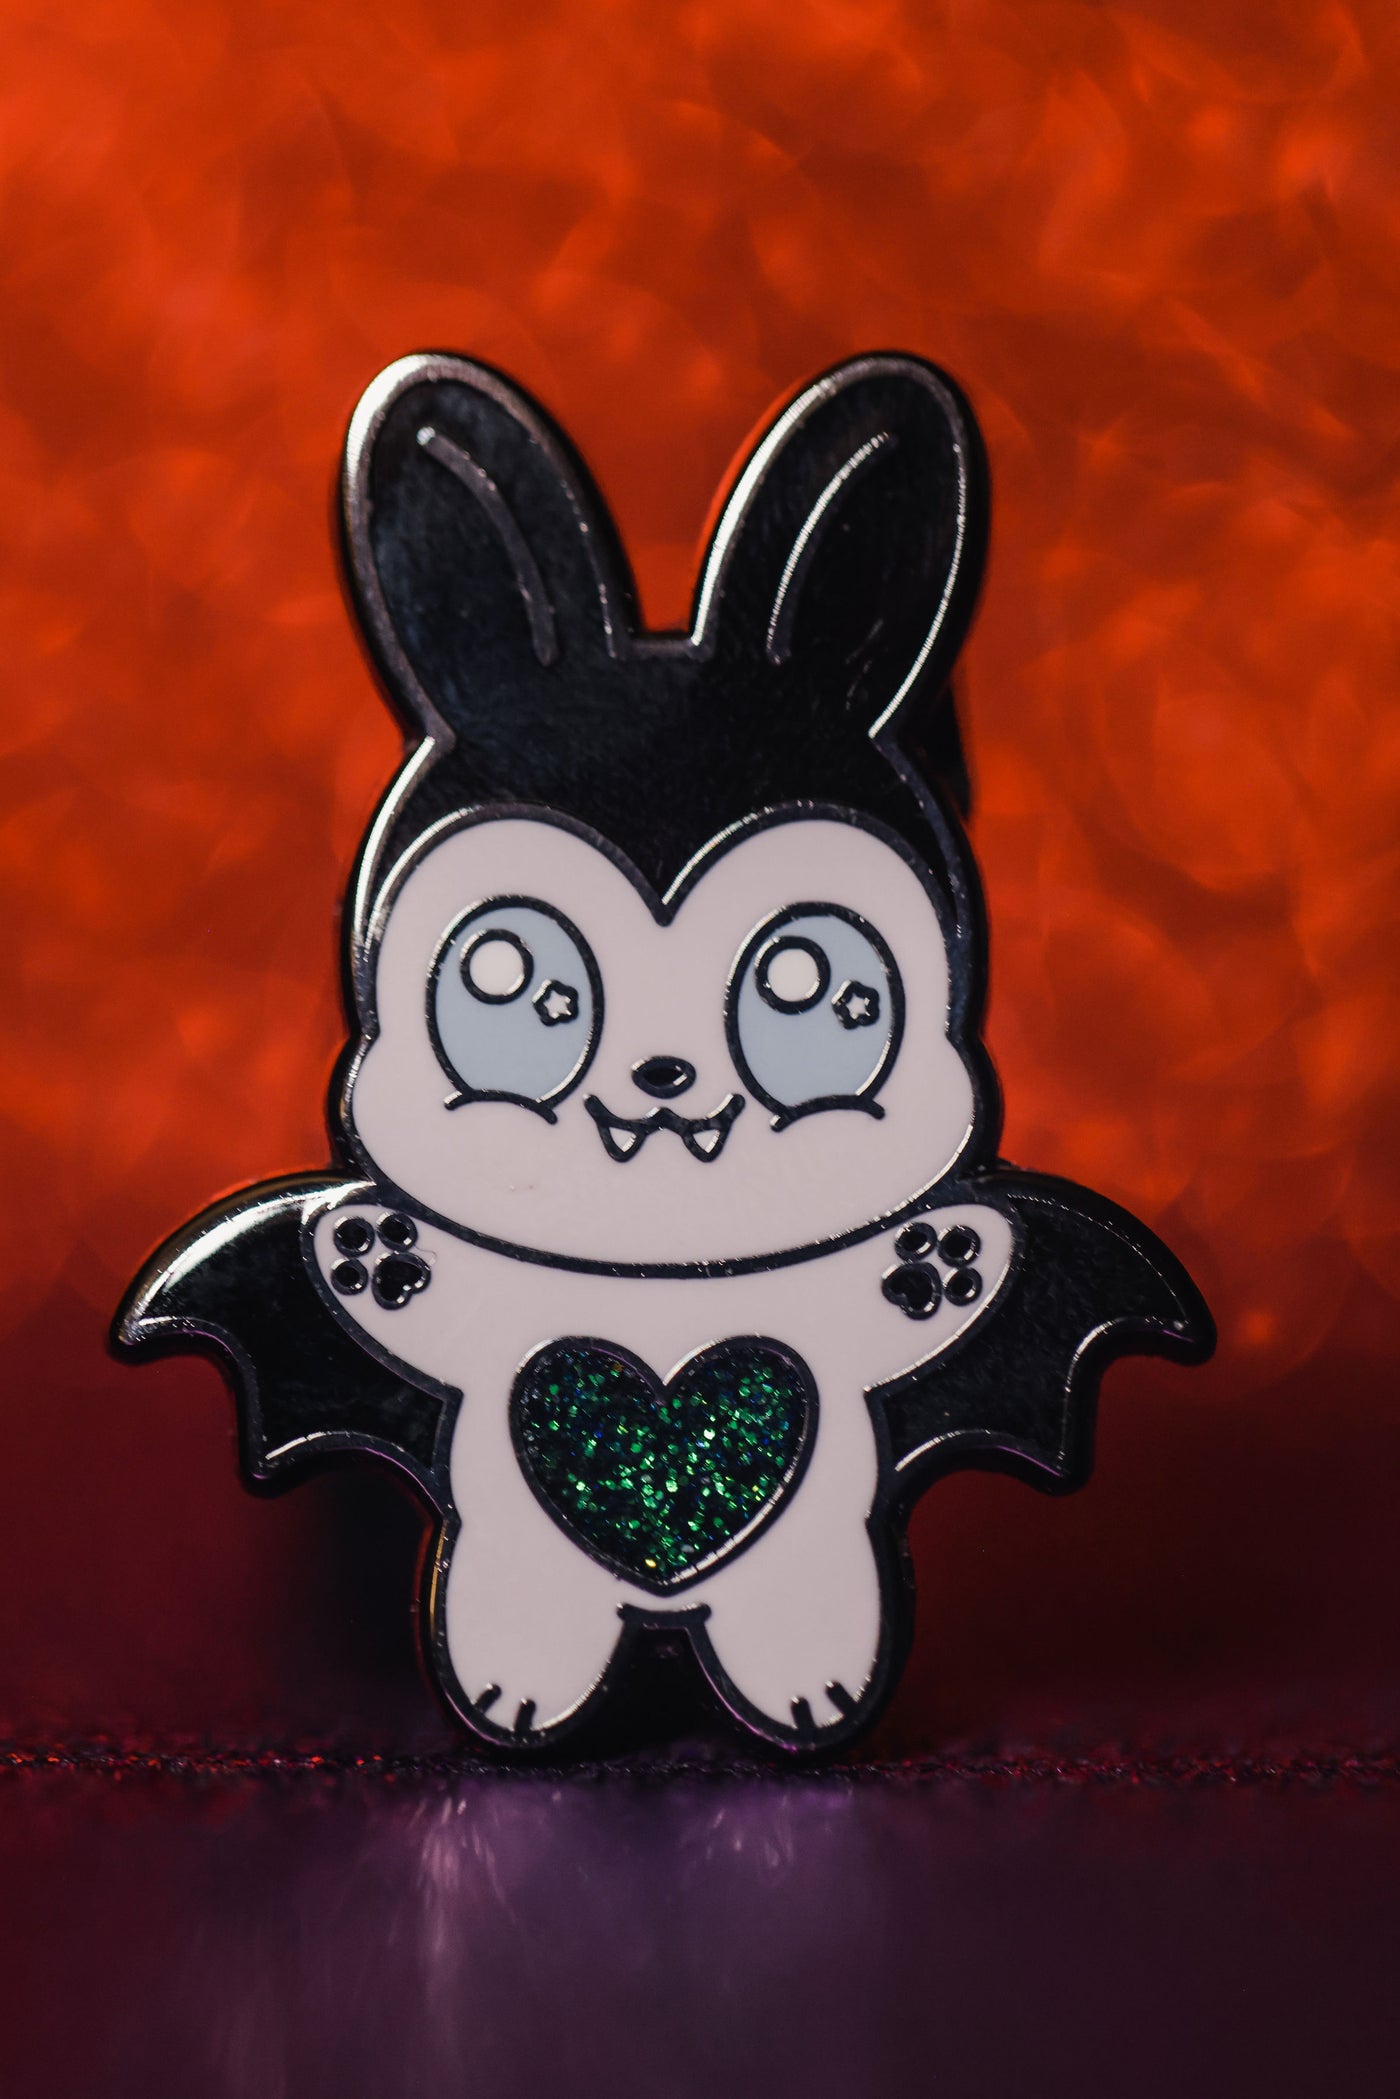 Cry Baby Bunny Enamel Pin - Spooky and Kawaii Bunnies Collection